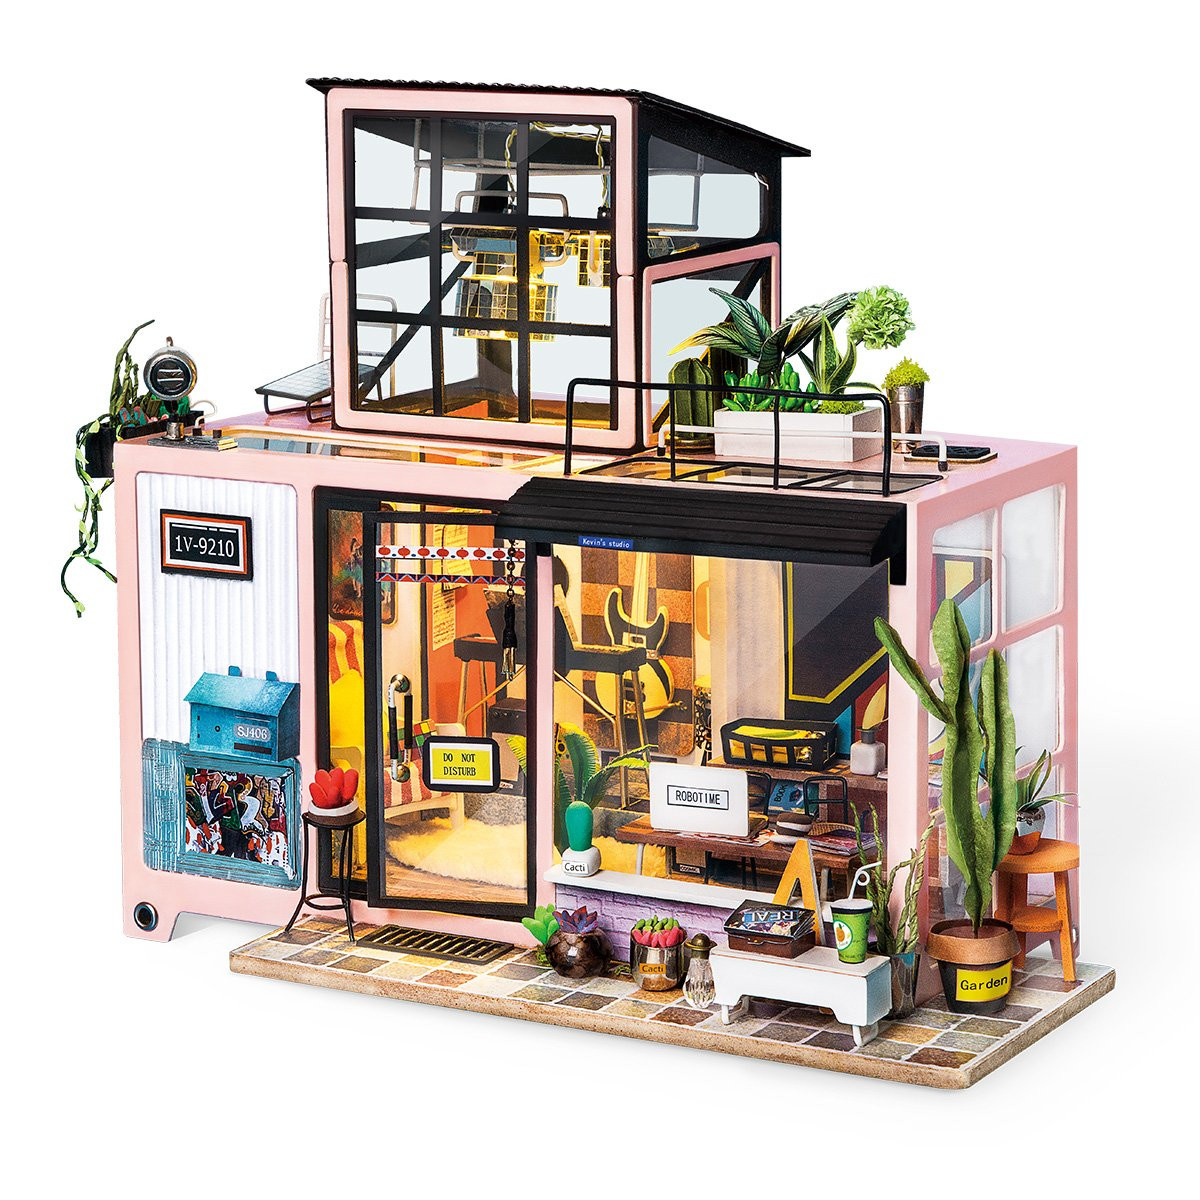 DIY Miniature Dollhouse Kits
 Kevin s Studio Robotime DIY Miniature Dollhouse Kit